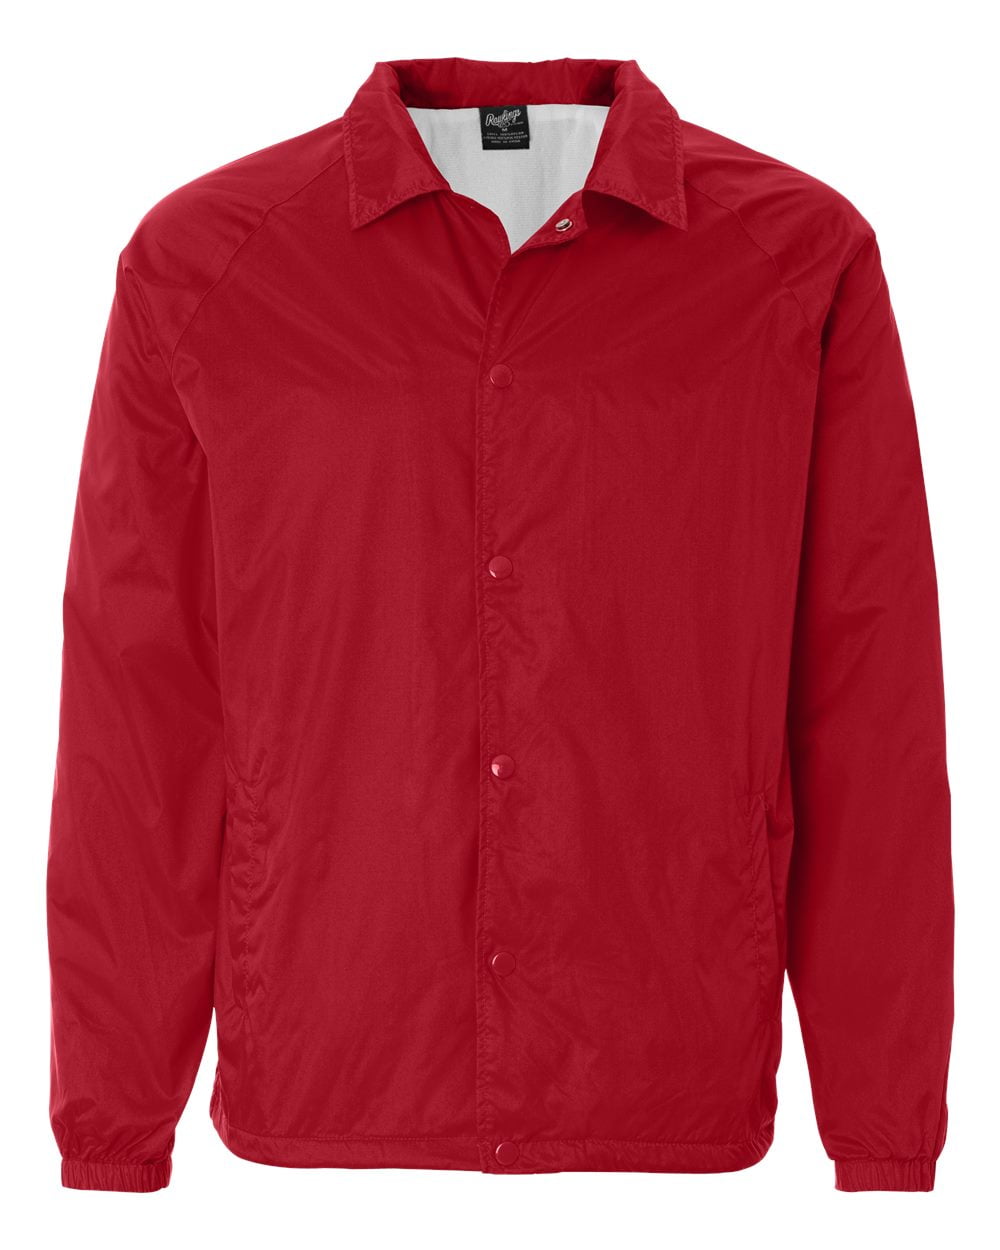 Adult Nylon Taffeta Coaches Jacket - RED - S - Walmart.com